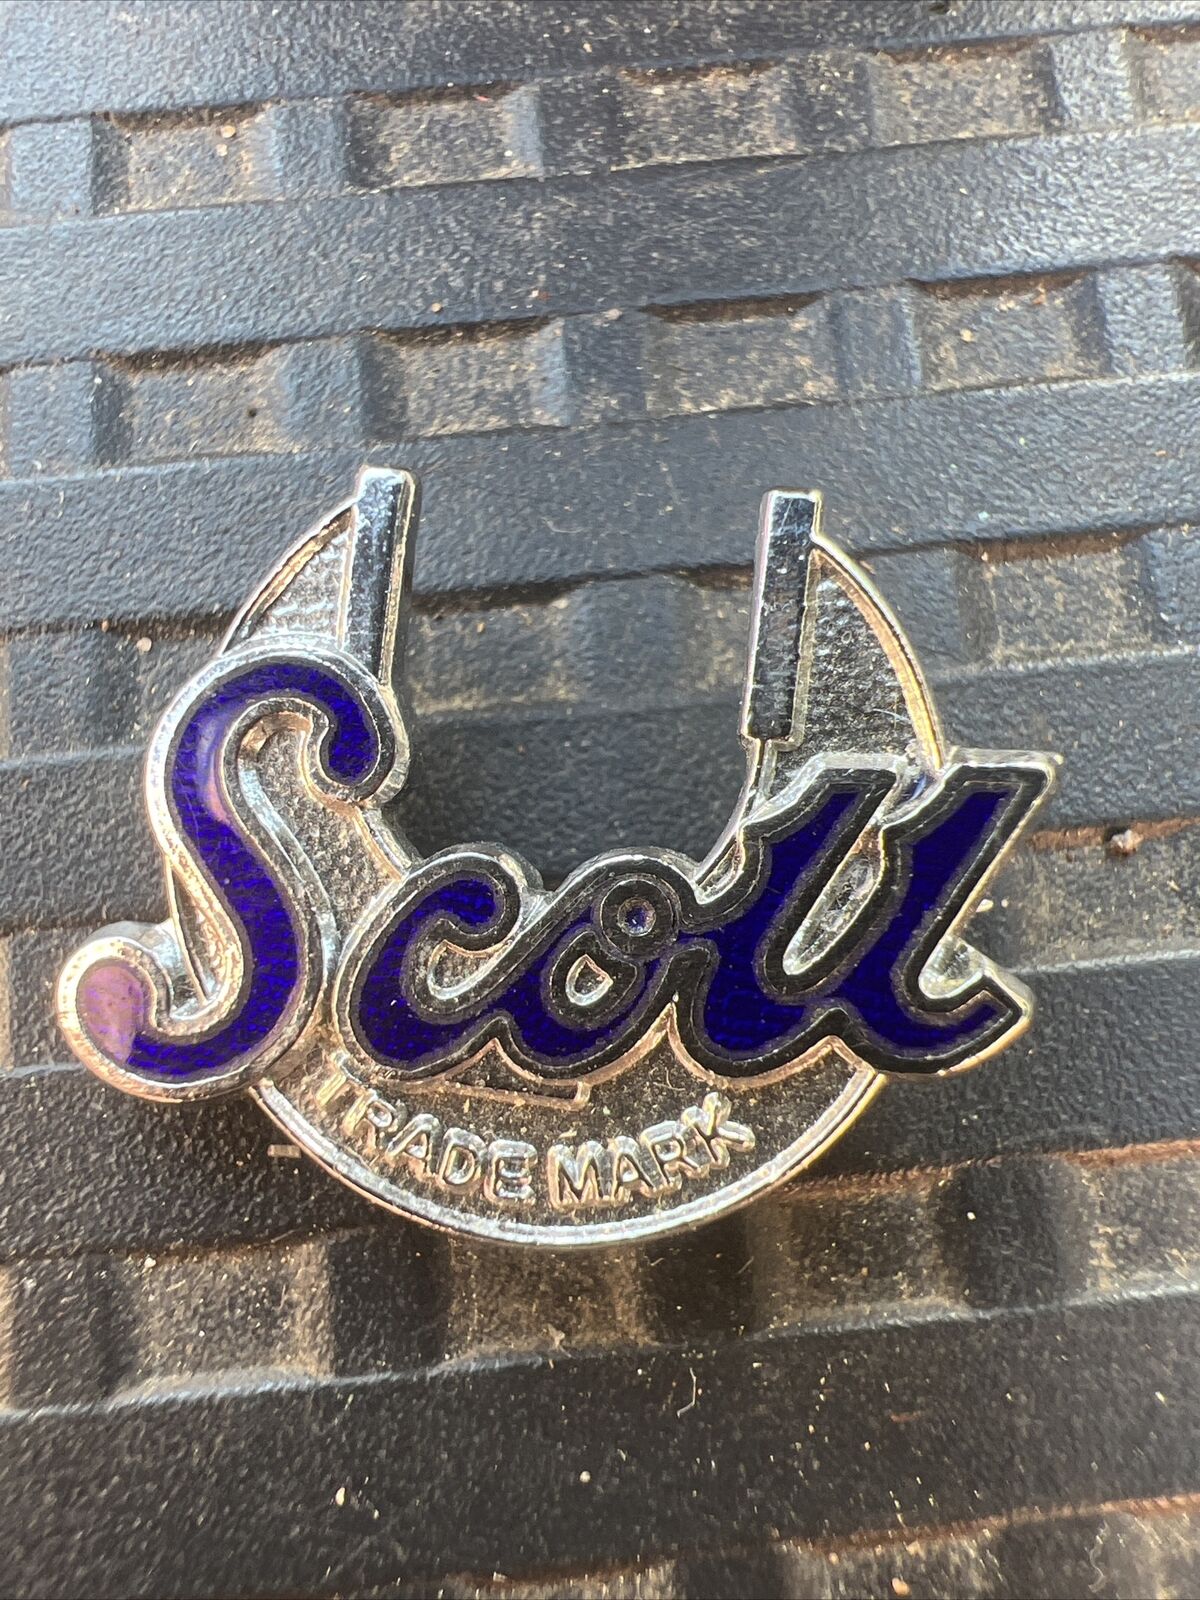 Vintage SCOTT Trade Mark Motorcycle Bike RARE Badge